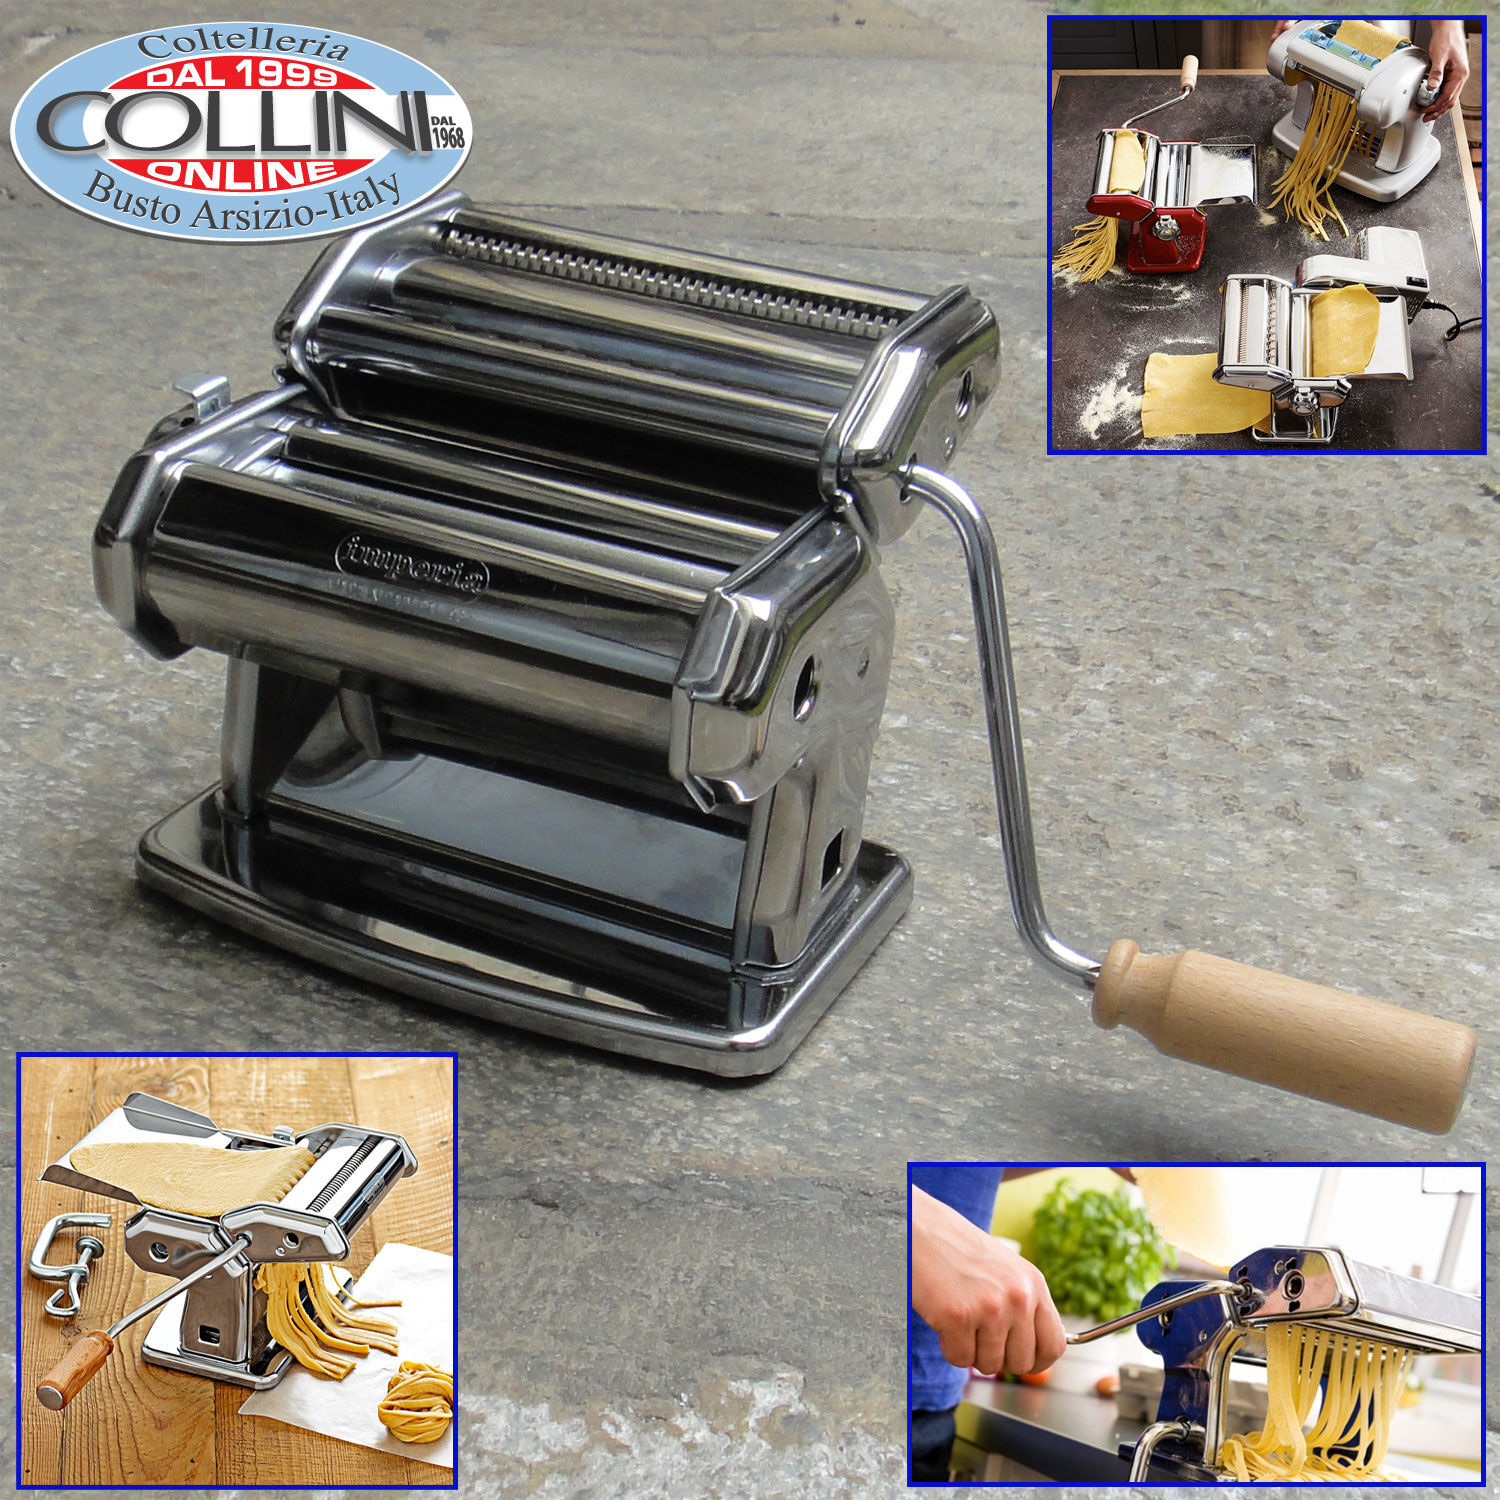 https://www.coltelleriacollini.com/media/catalog/product/cache/2d742e981ffa5c28990fe05a9b6044c9/image/95880eea/imperia-pasta-maker.jpg